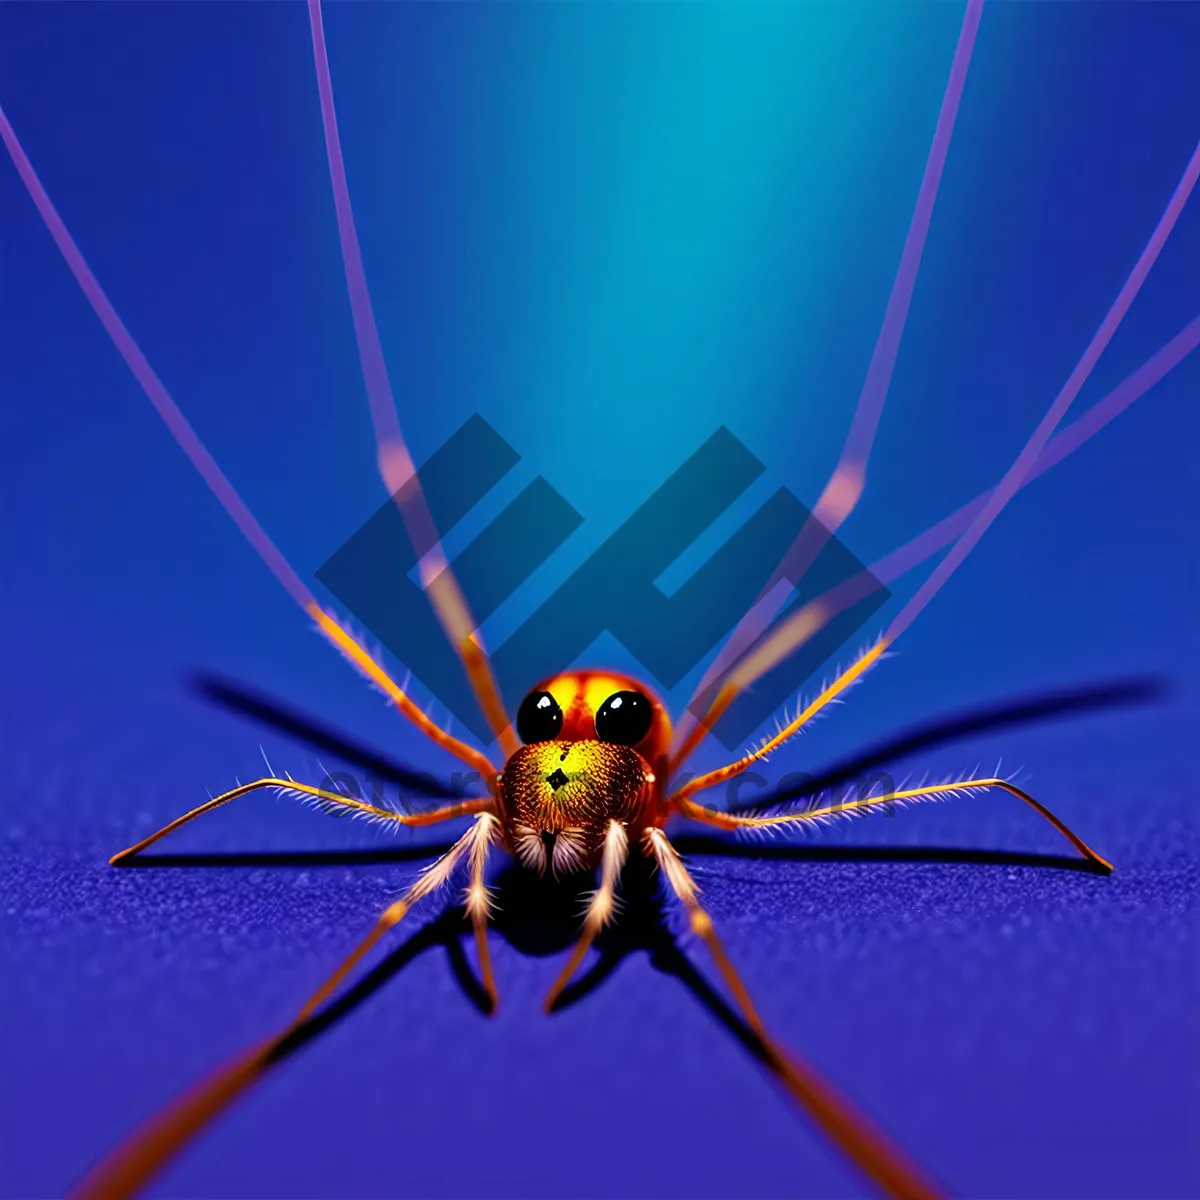 Picture of Arachnid Design: Intricate Spider Web Art